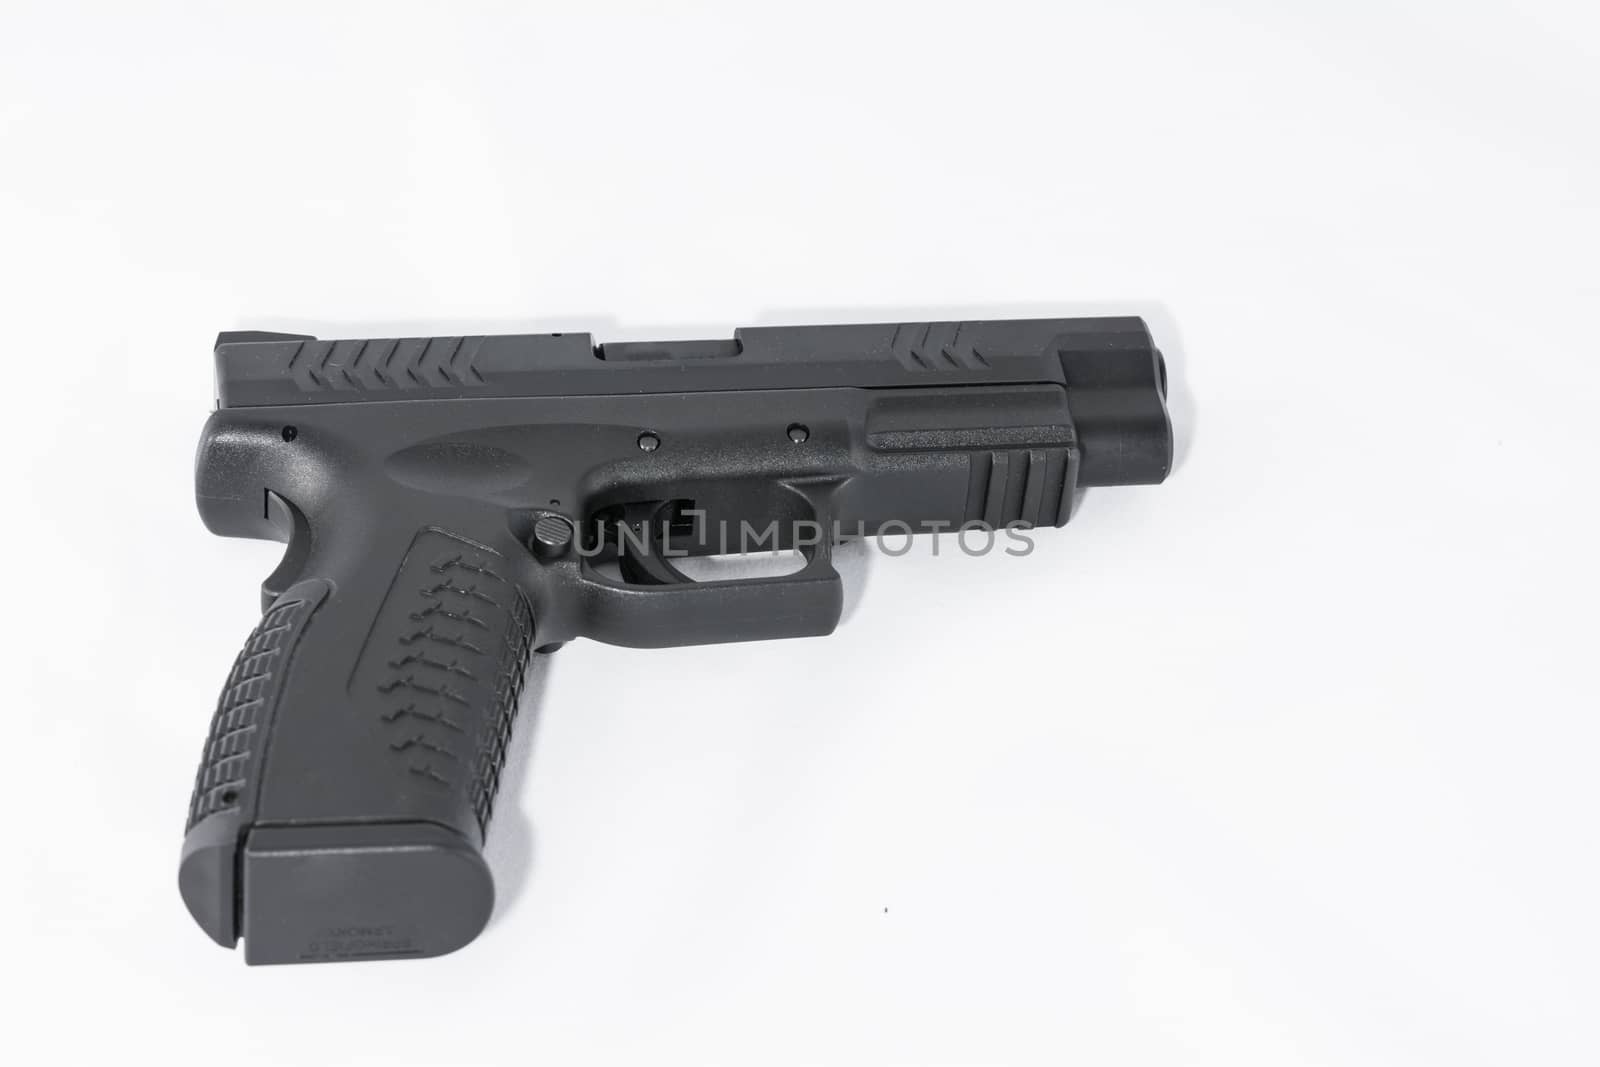 Black hand gun on white background with details